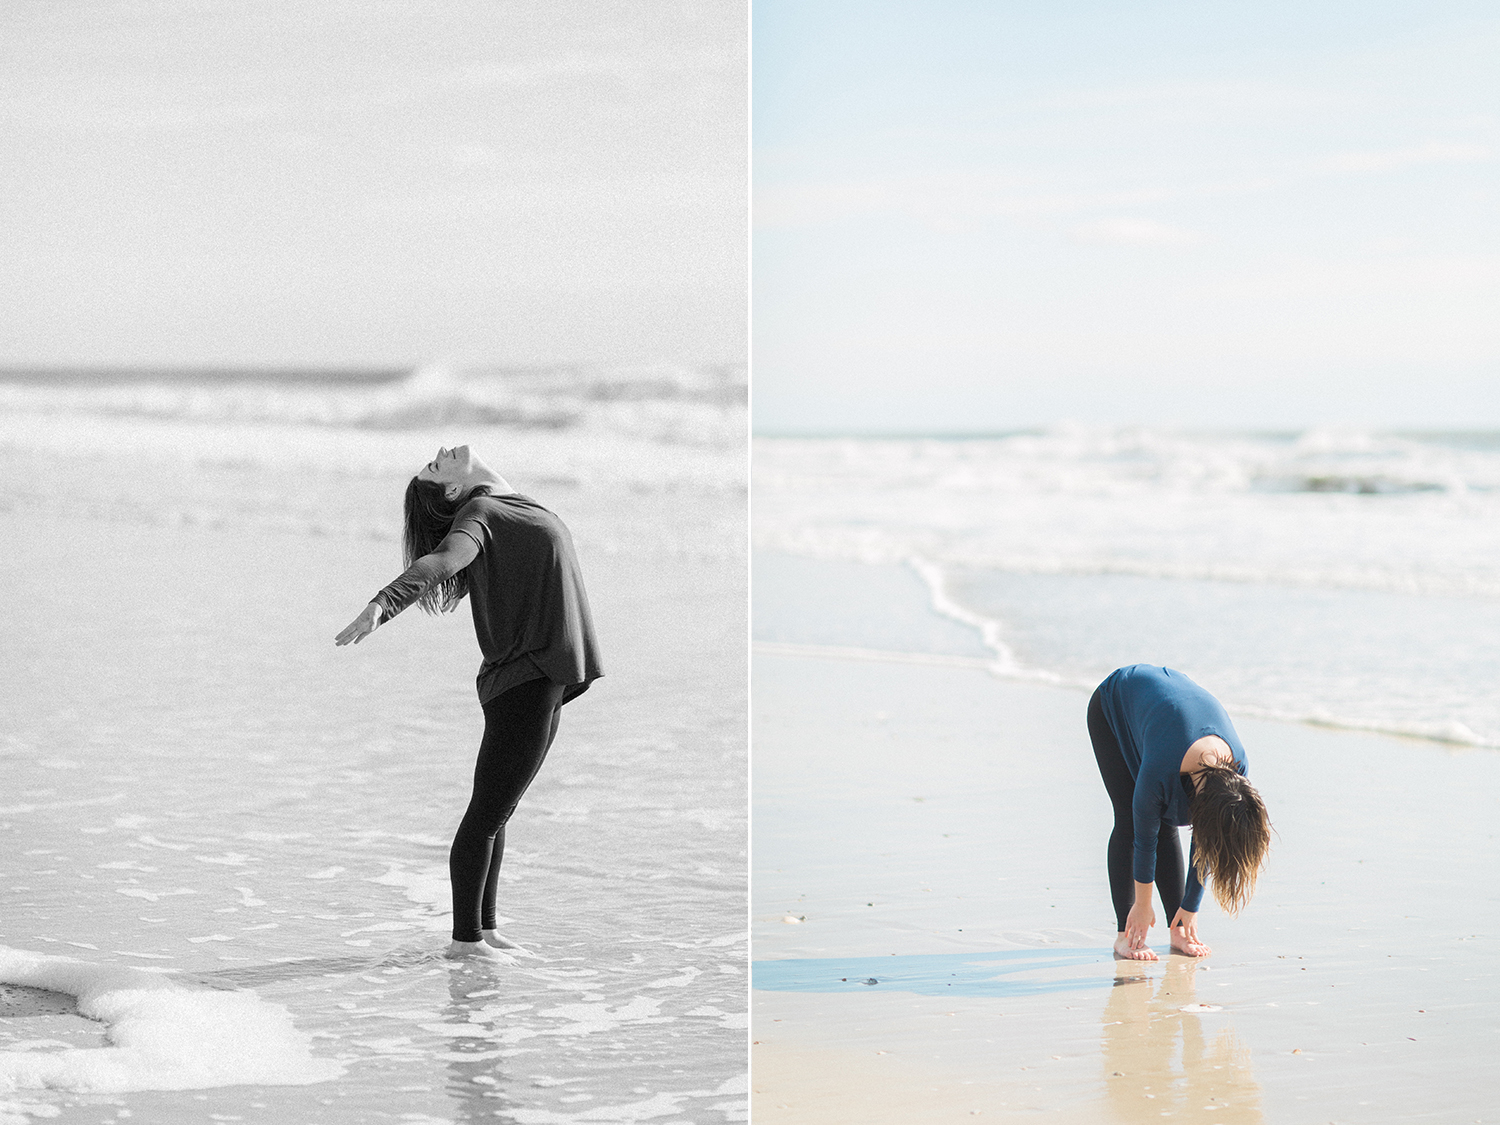 Yoga photography by the ocean | Washington, DC lifestyle photographer